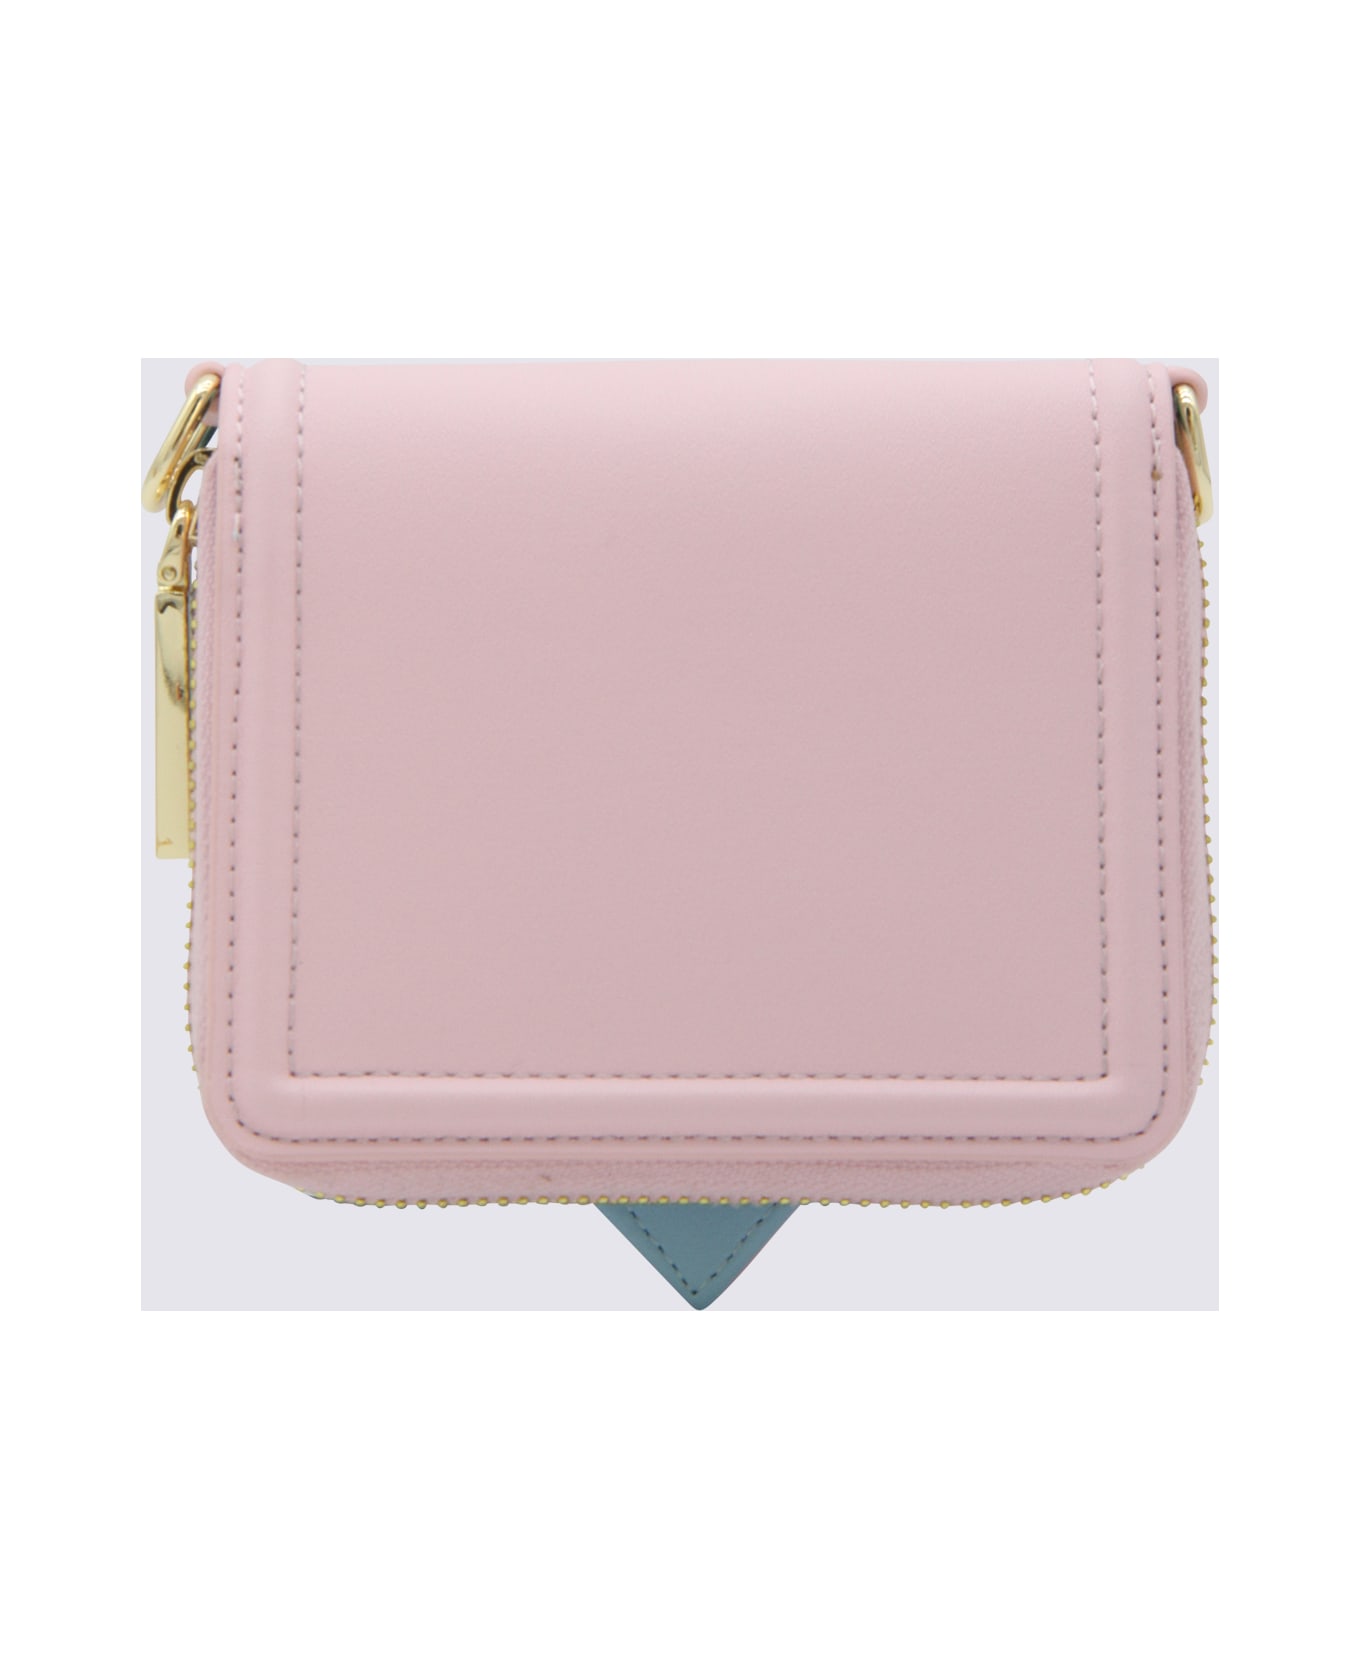 Chiara Ferragni Pink Crossbody Bag - Pink